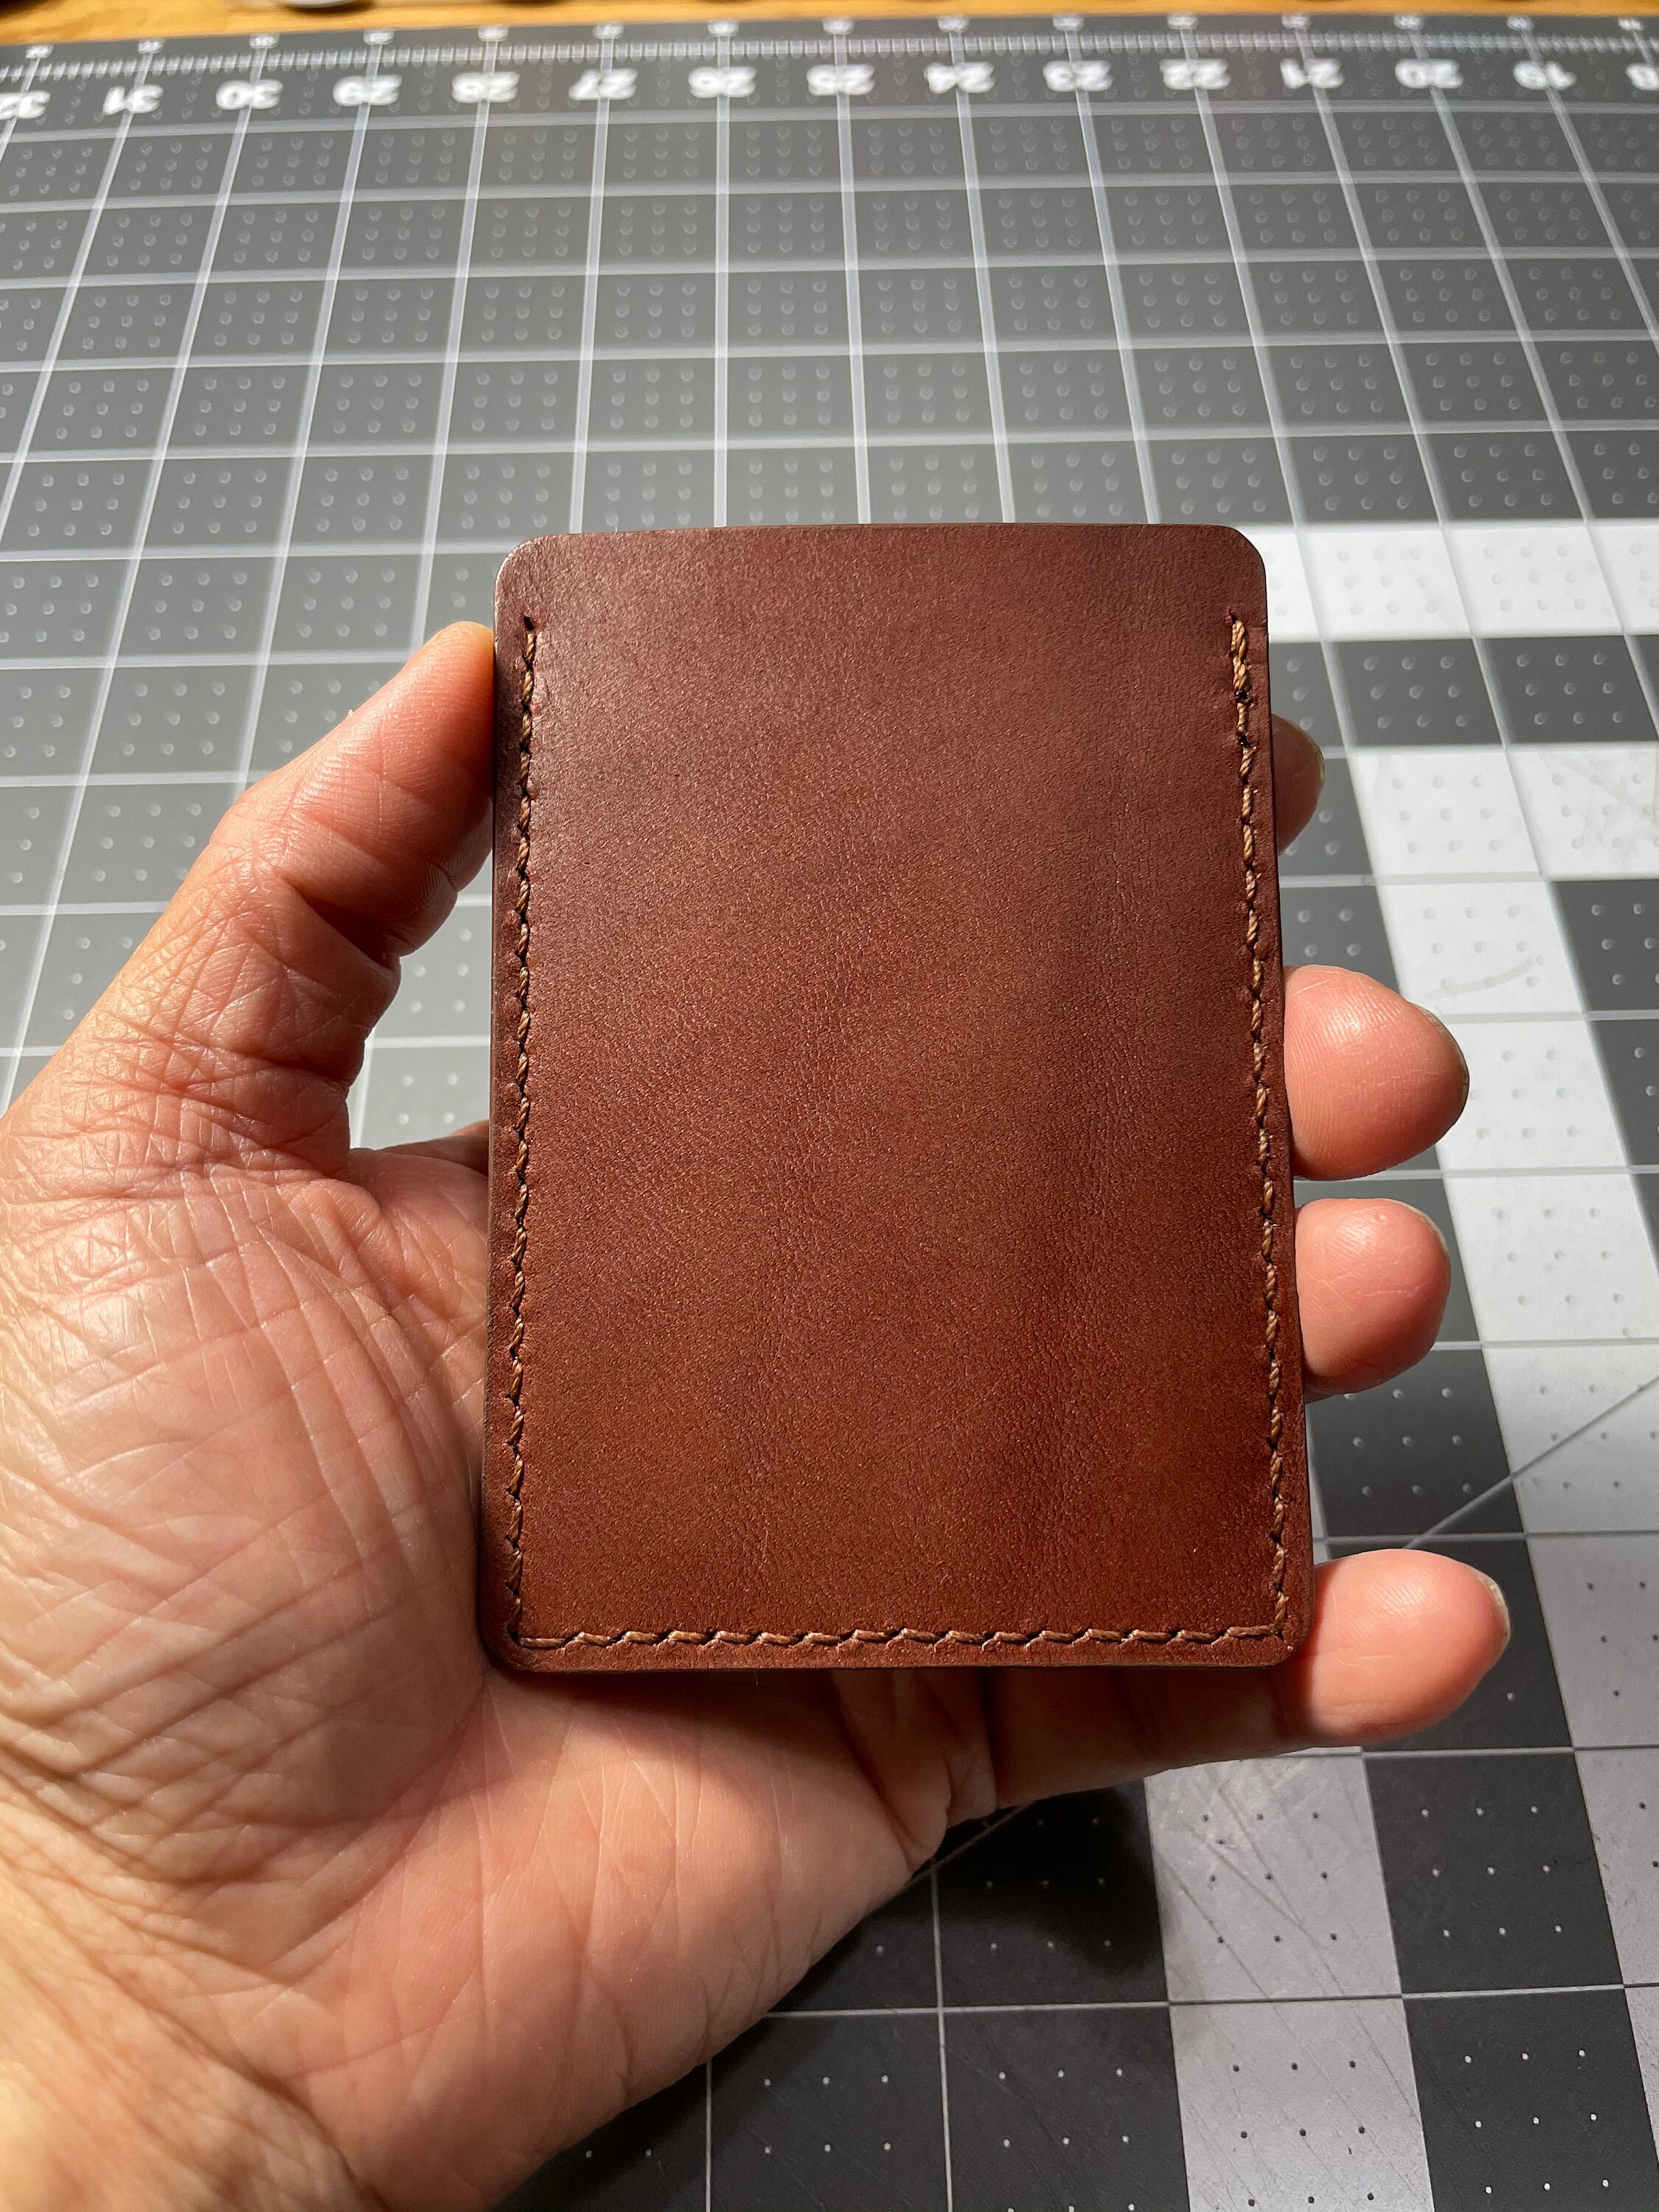 Mini Wallet Front Pocket Wallet Small Wallet Compact Wallet Thin Wallet  Slim Wallet Mens Wallet Wallet for Himid Walletcards Wallet 